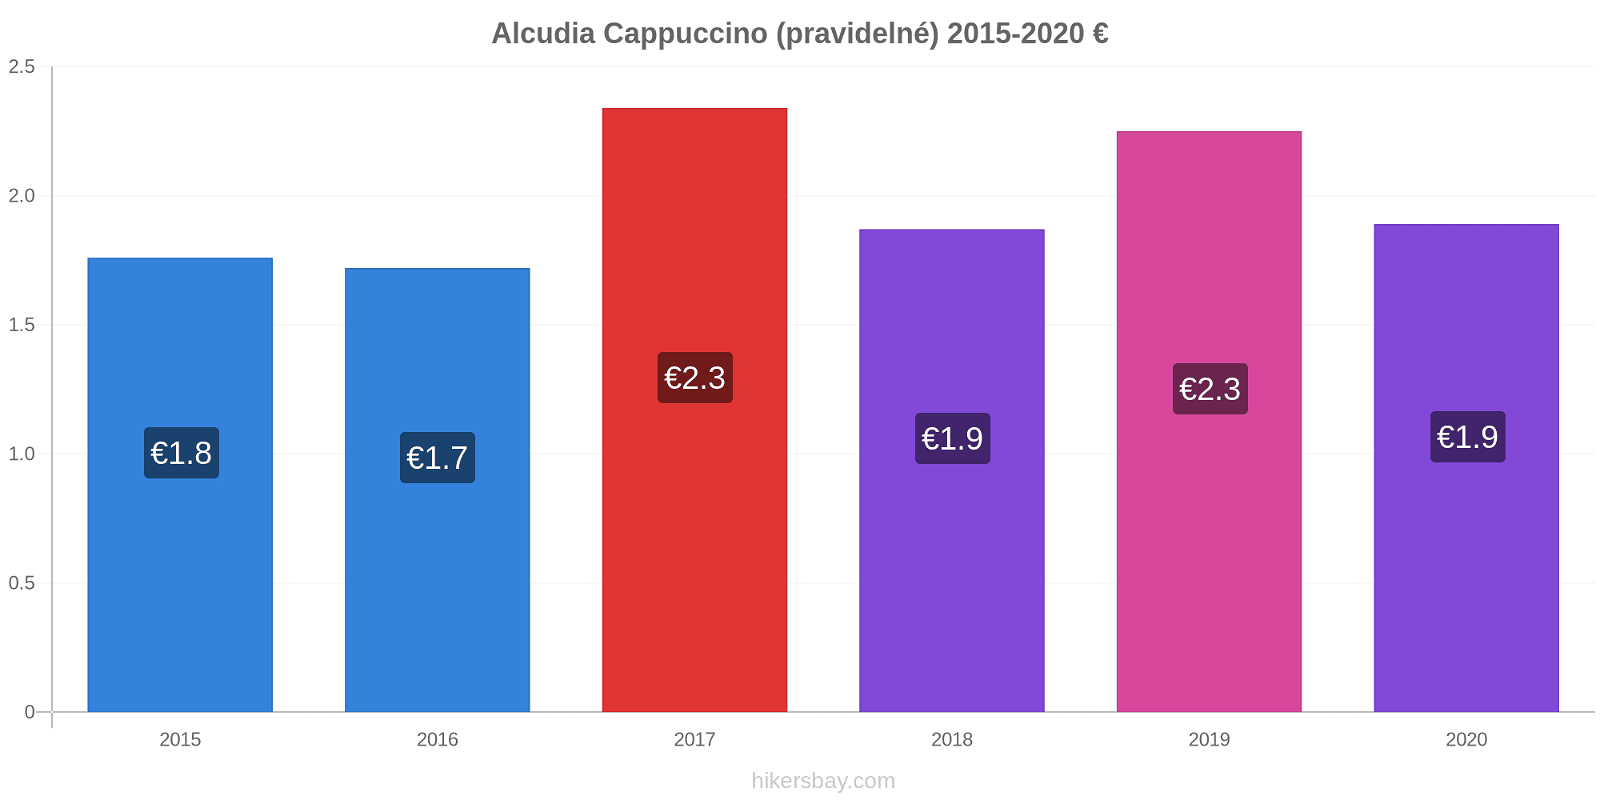 Alcudia změny cen Cappuccino (pravidelné) hikersbay.com